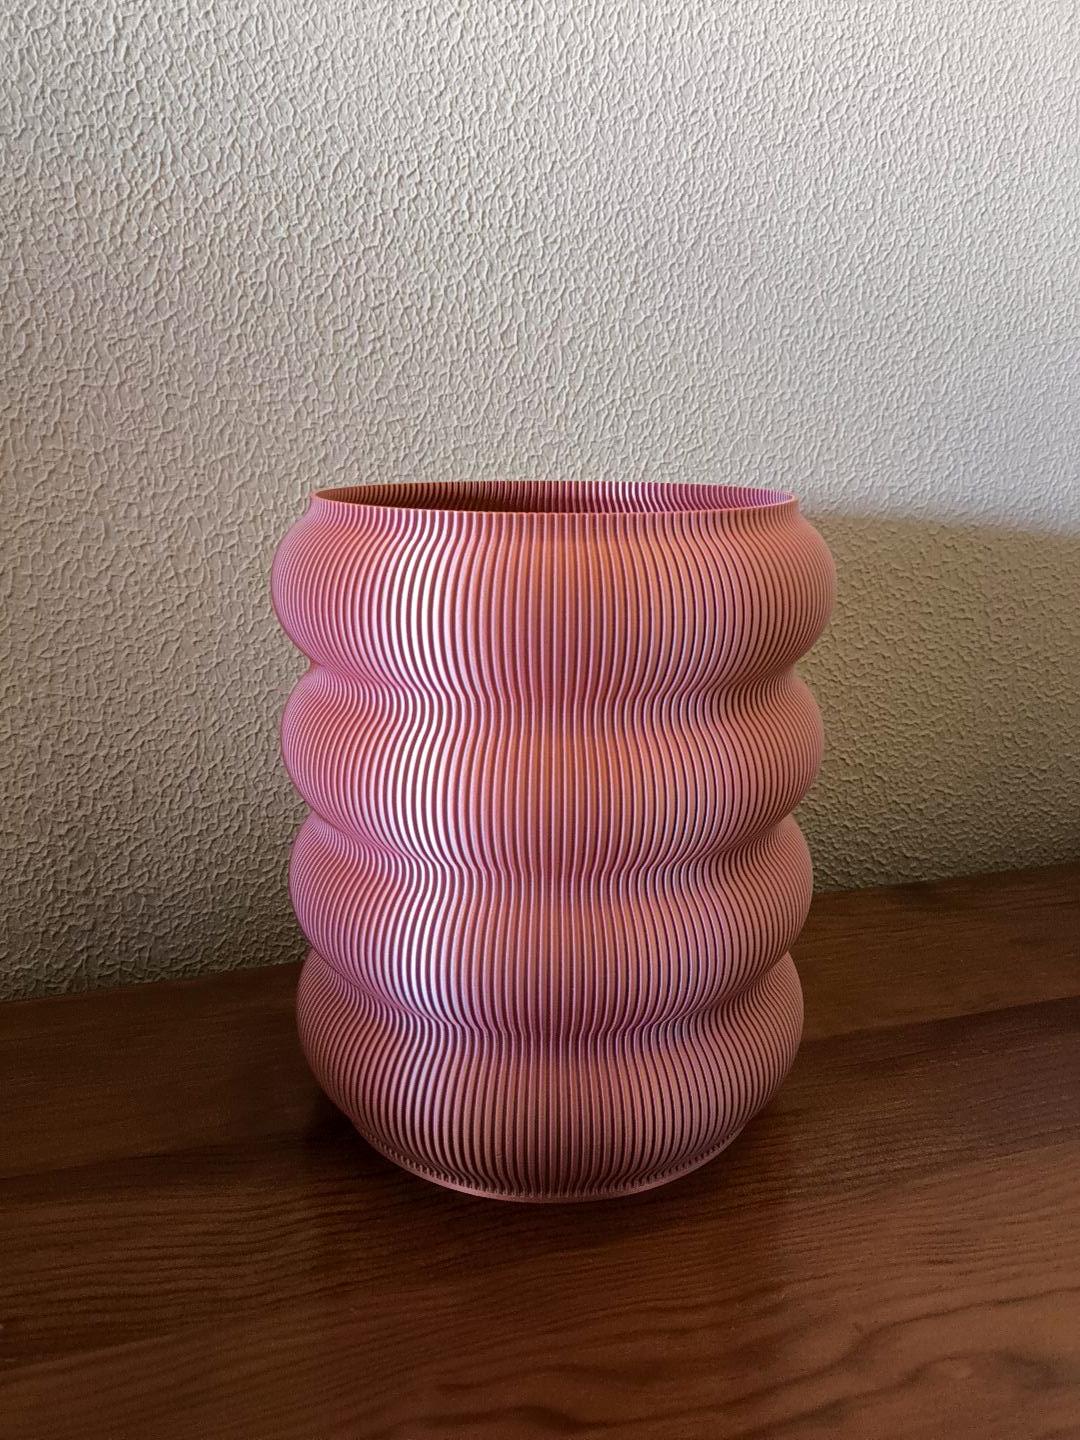 Flowing Grace Vase with Optional Lid 3d model